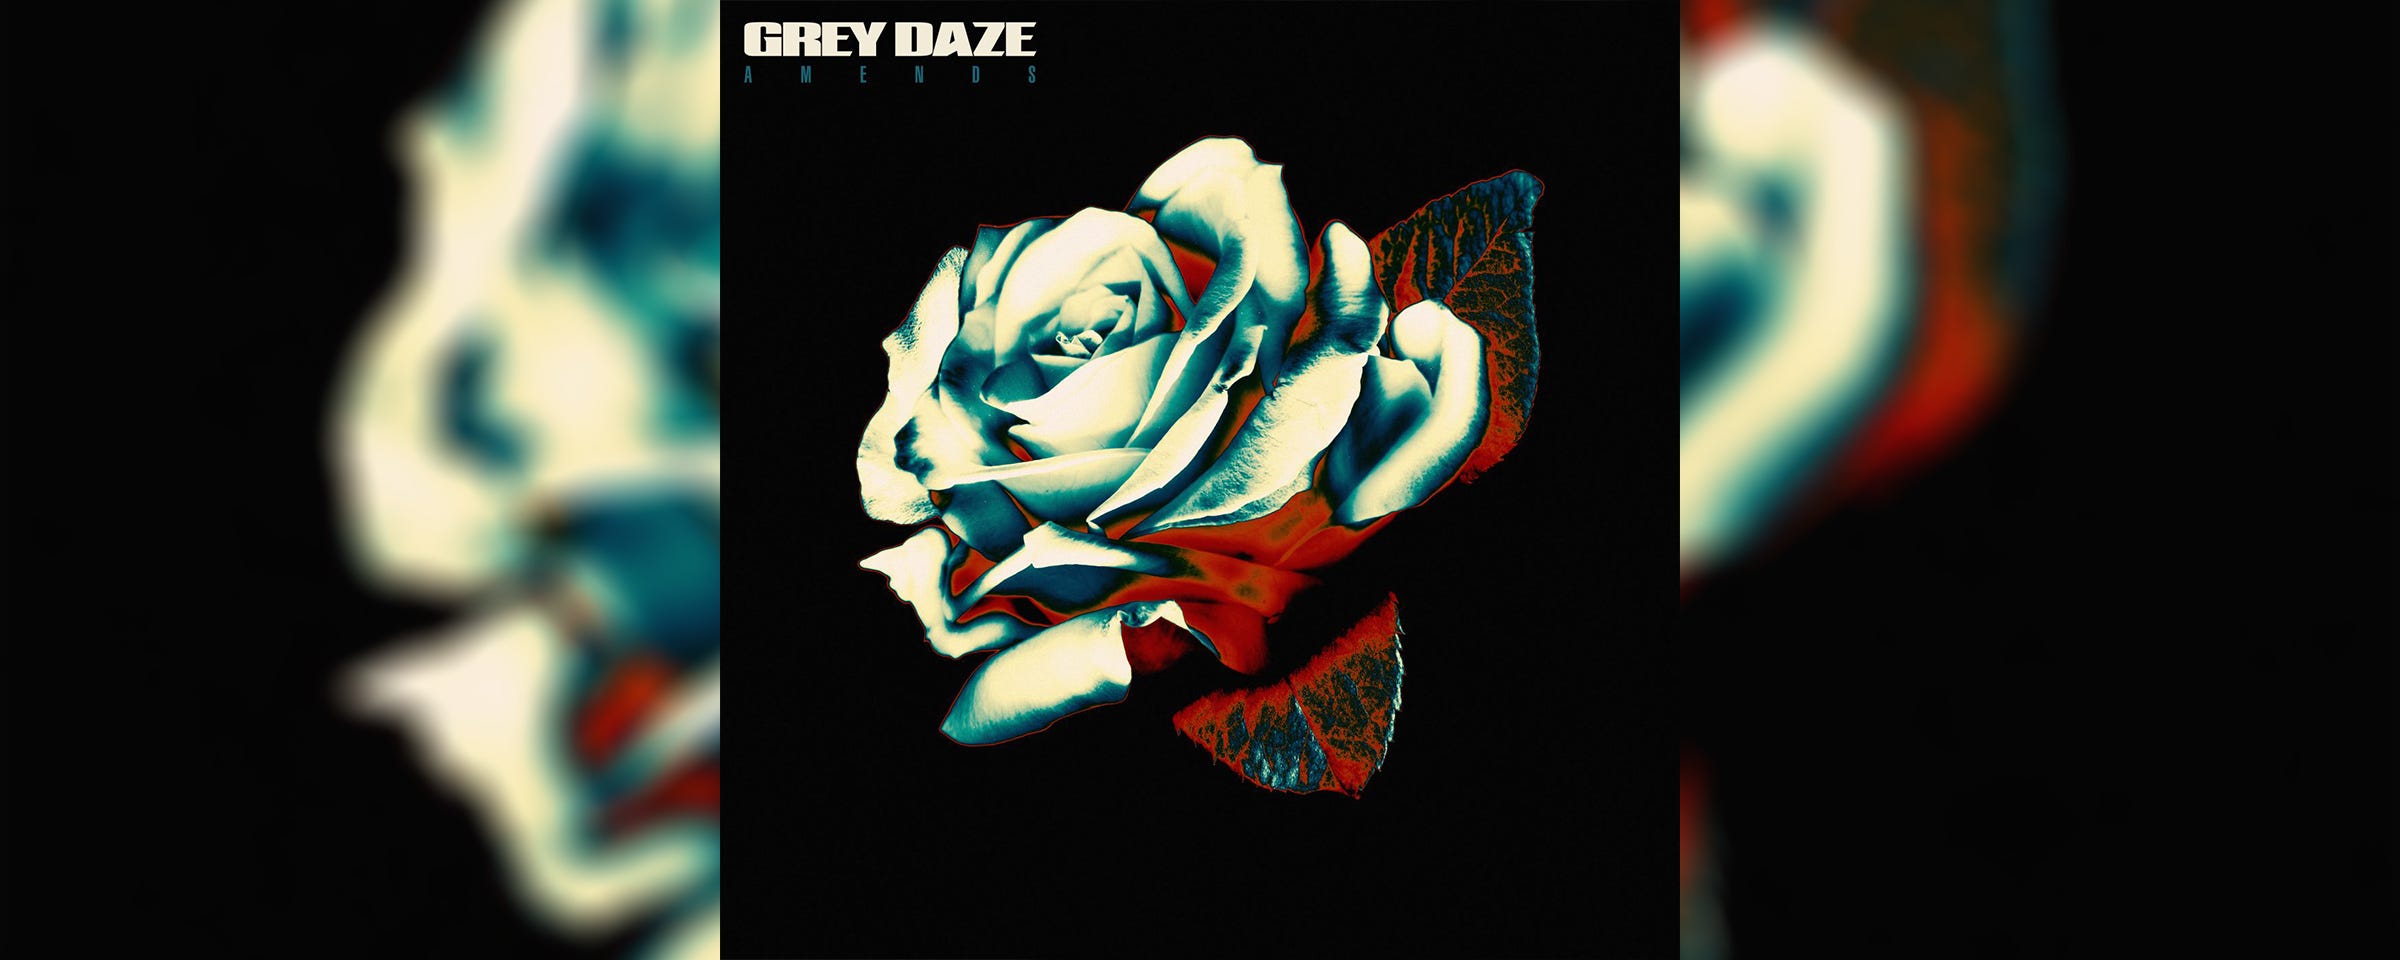 Grey Daze — Amends — Album Review | by Joe Boothby | Medium